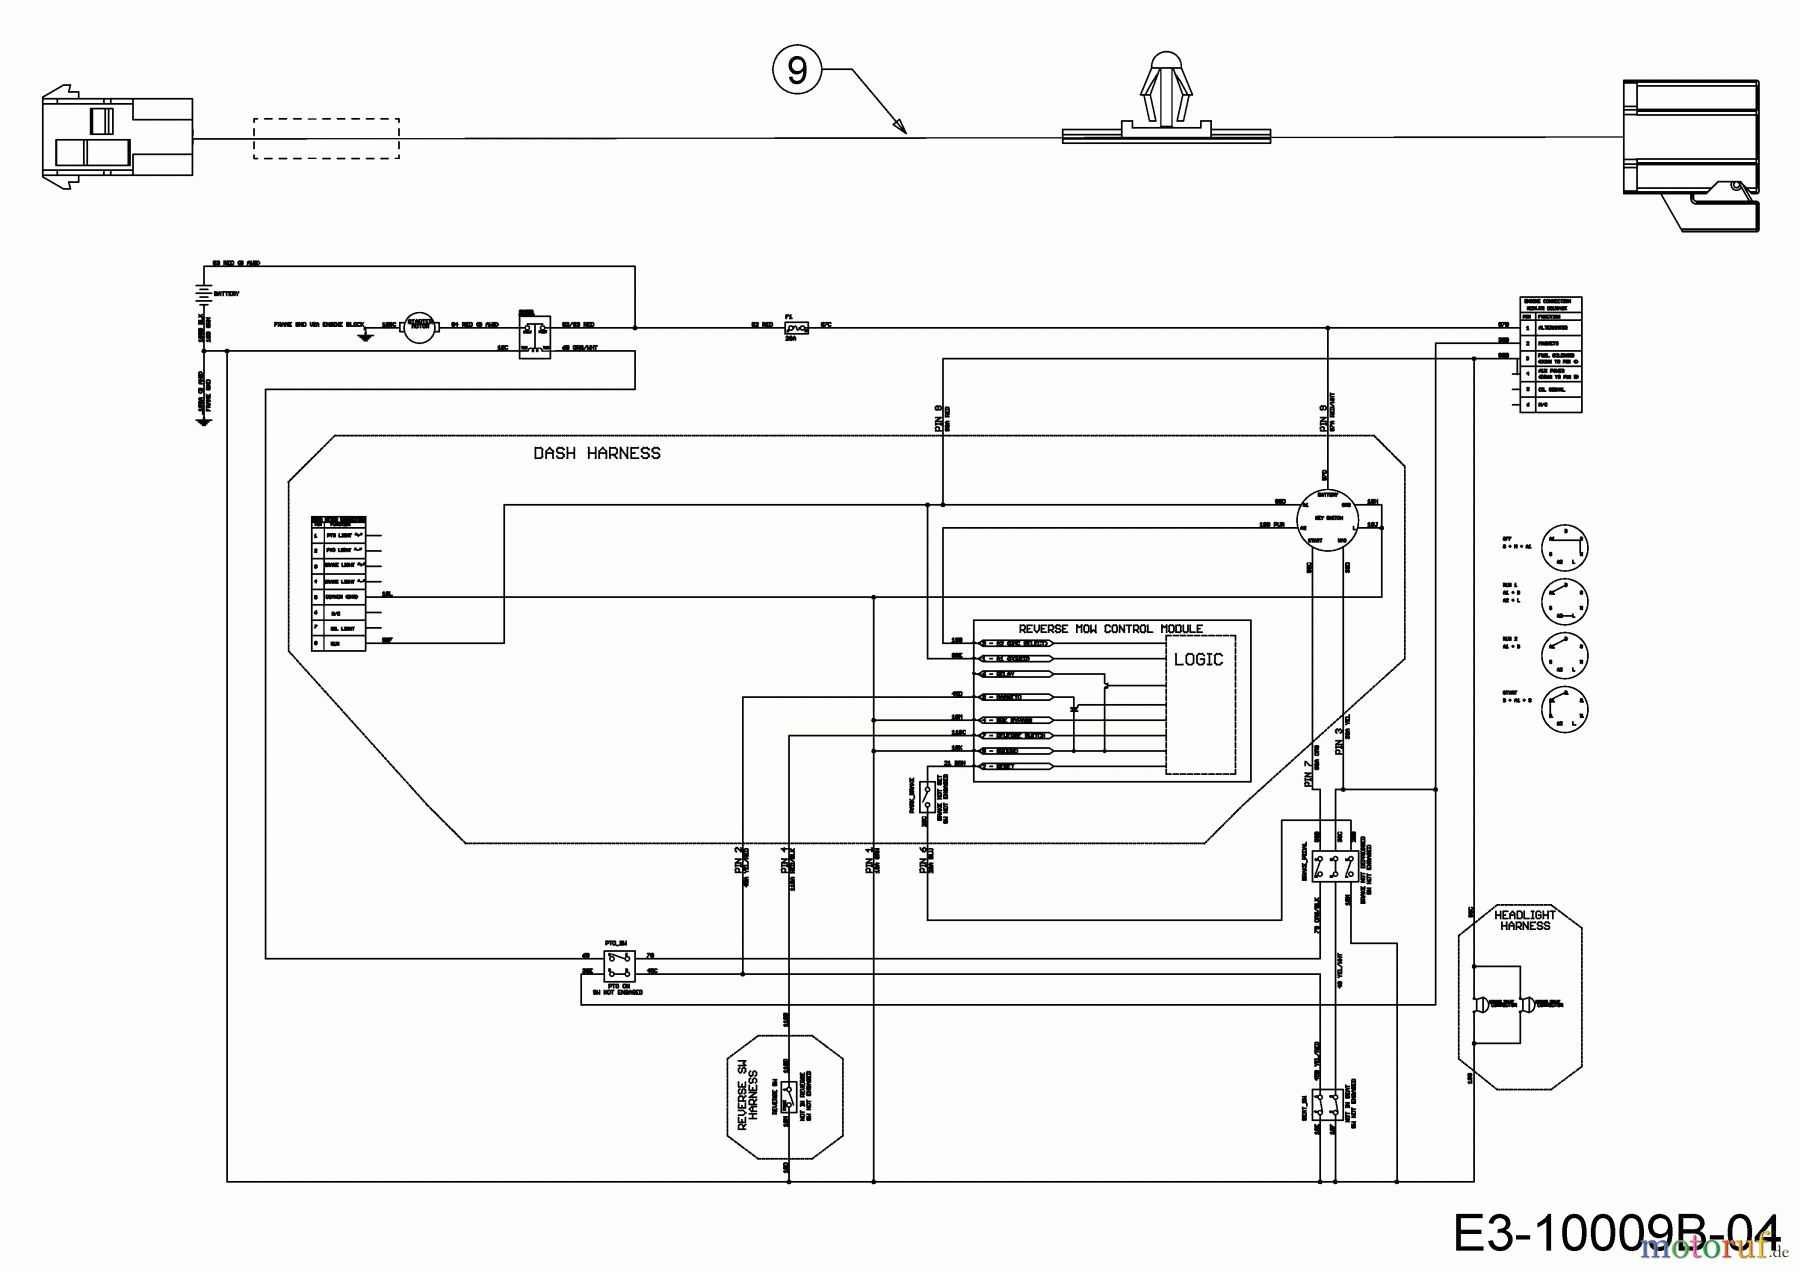  Greenbase Lawn tractors V 162 C 13A8A1KF618 (2020) Wiring diagram reverse